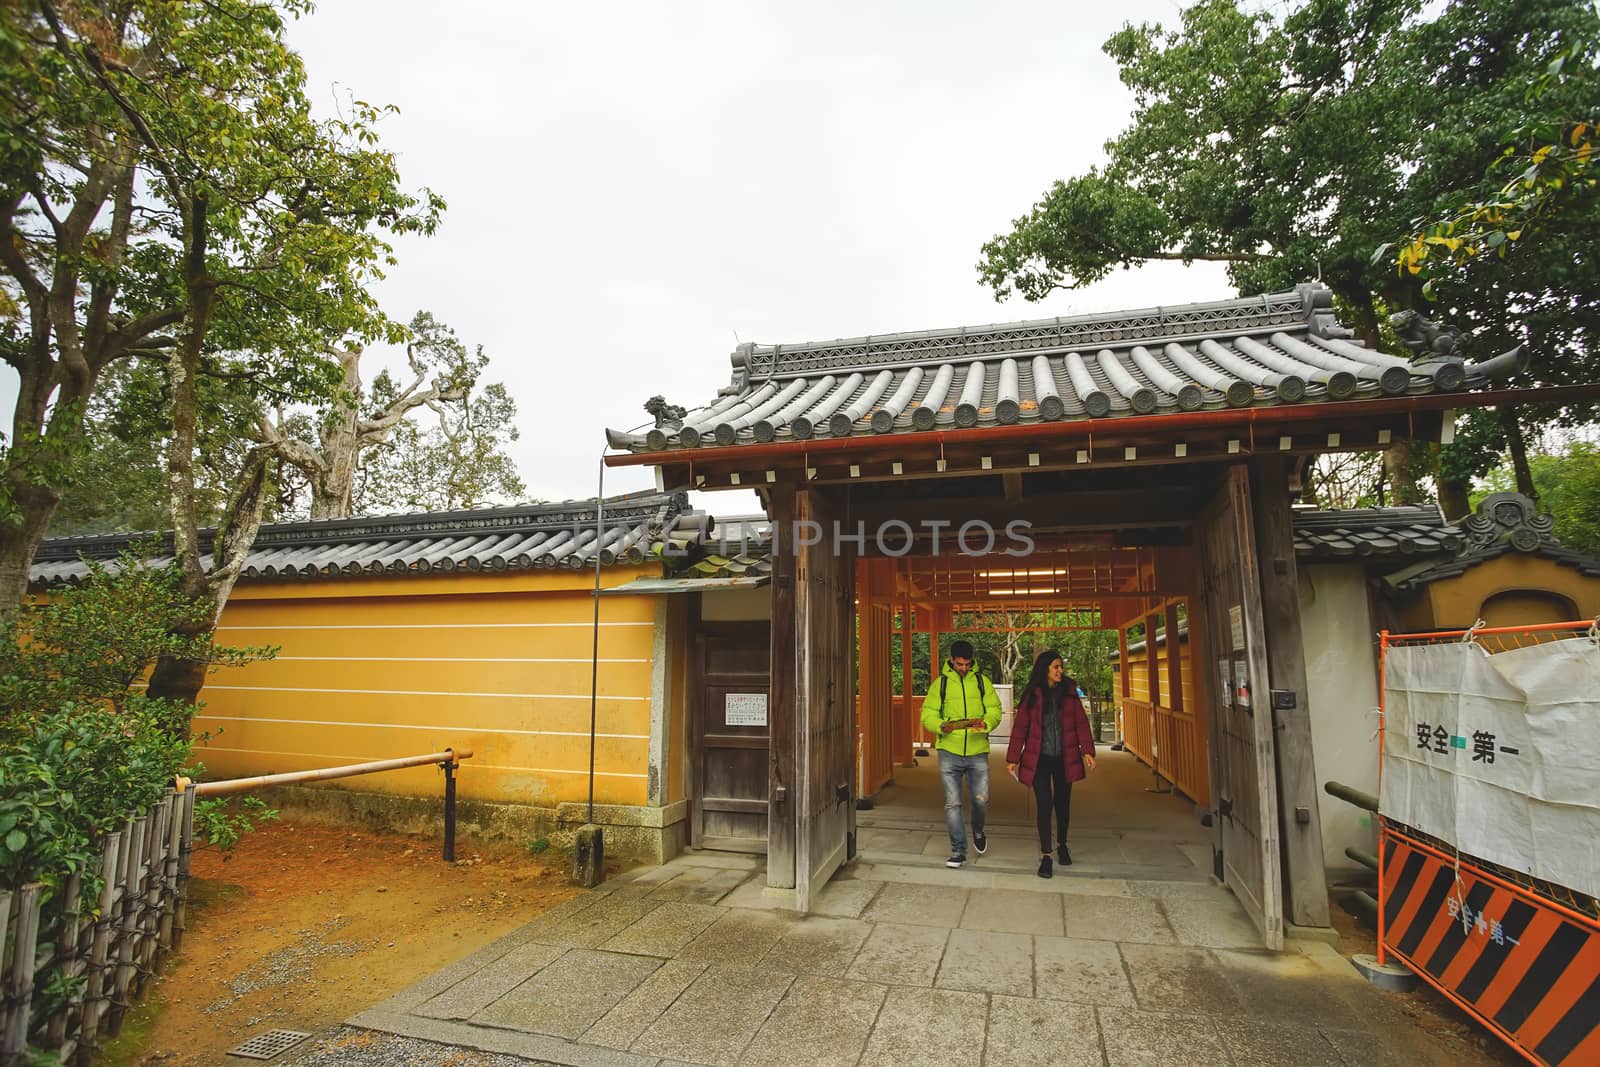 Kyoto, Japan - December 17, 2019 : Tourists walking through the entrance gate of Kinkakuji temple, Kyoto, Japan.